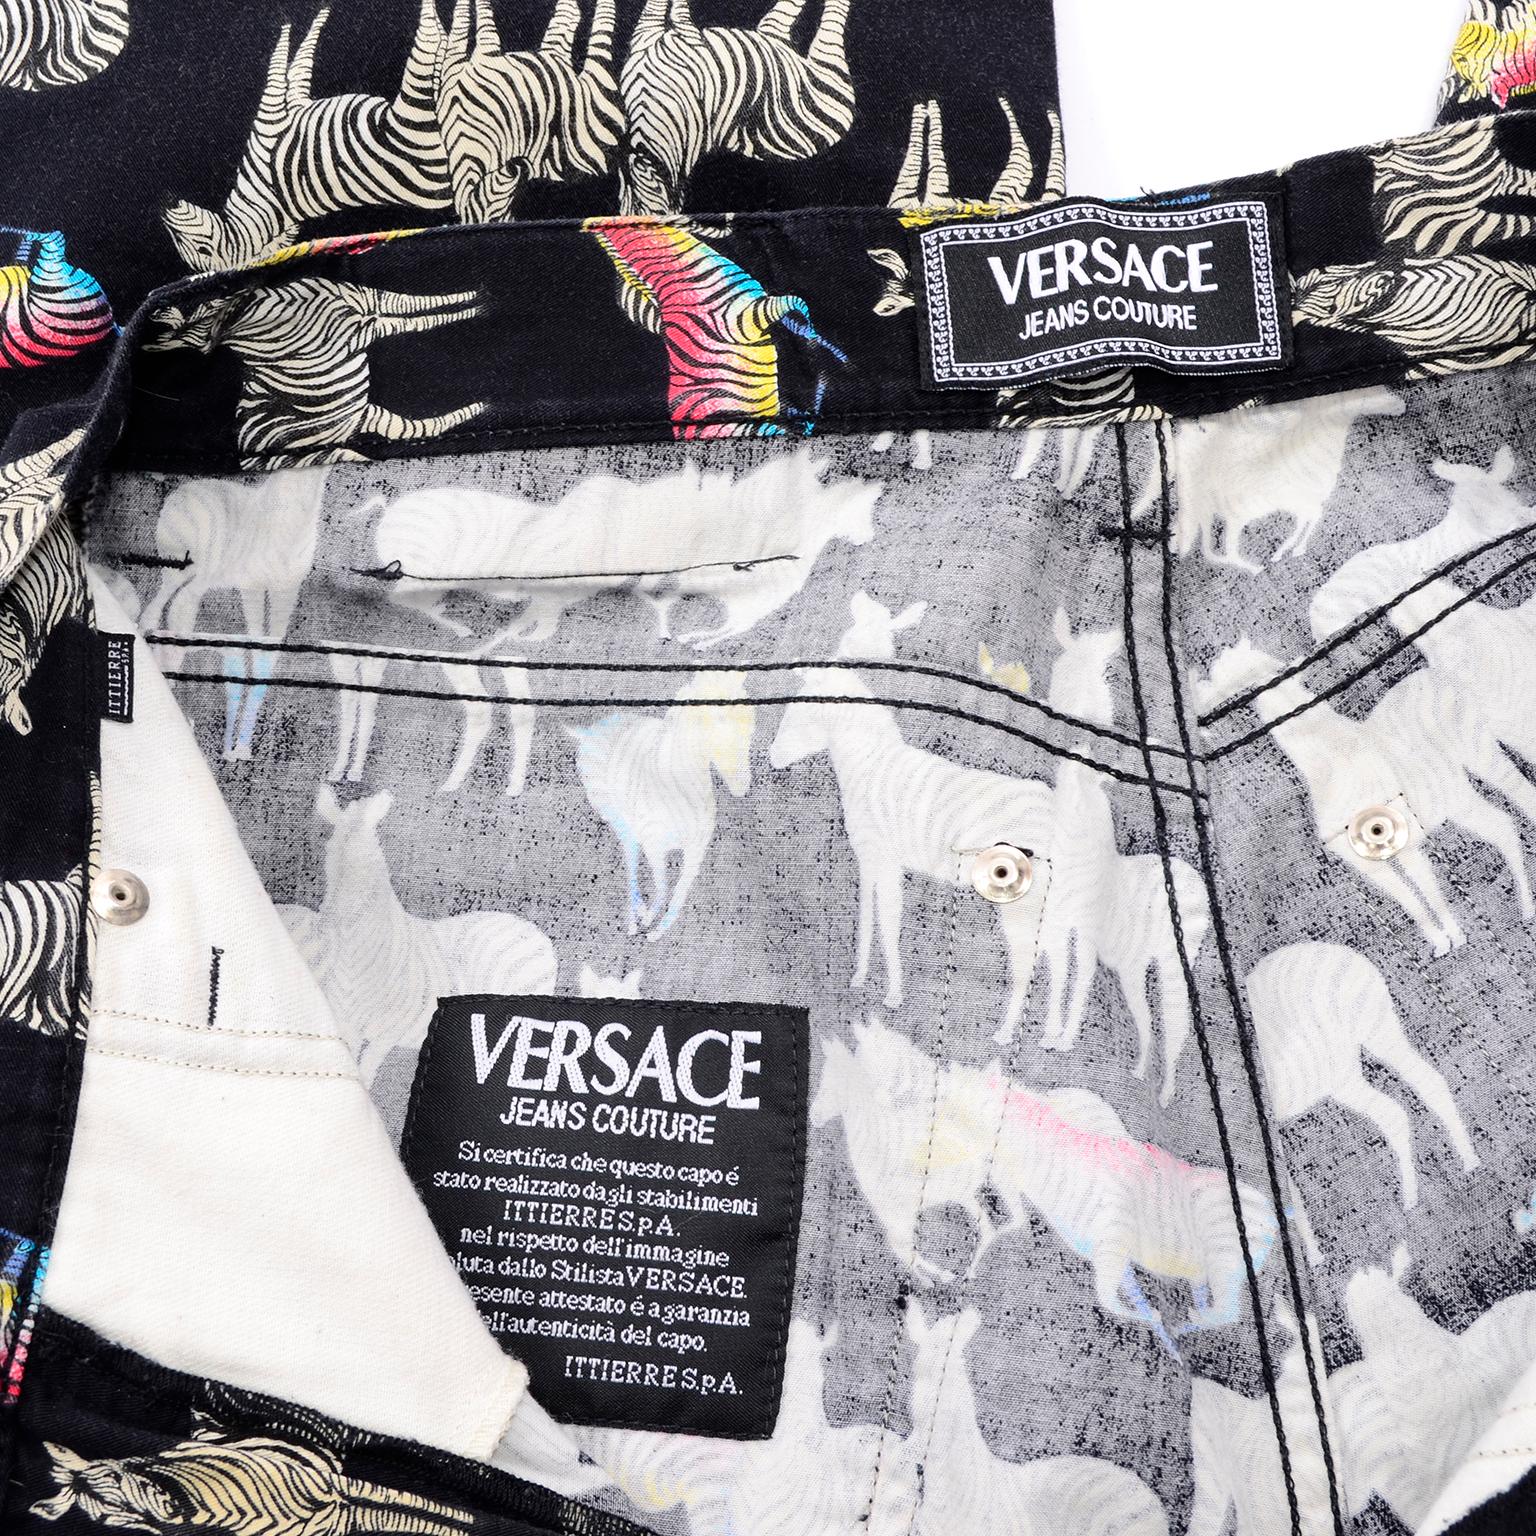 1990s Vintage Versace Jeans Couture Black Pants in Ombre Rainbow Zebra Print For Sale 7